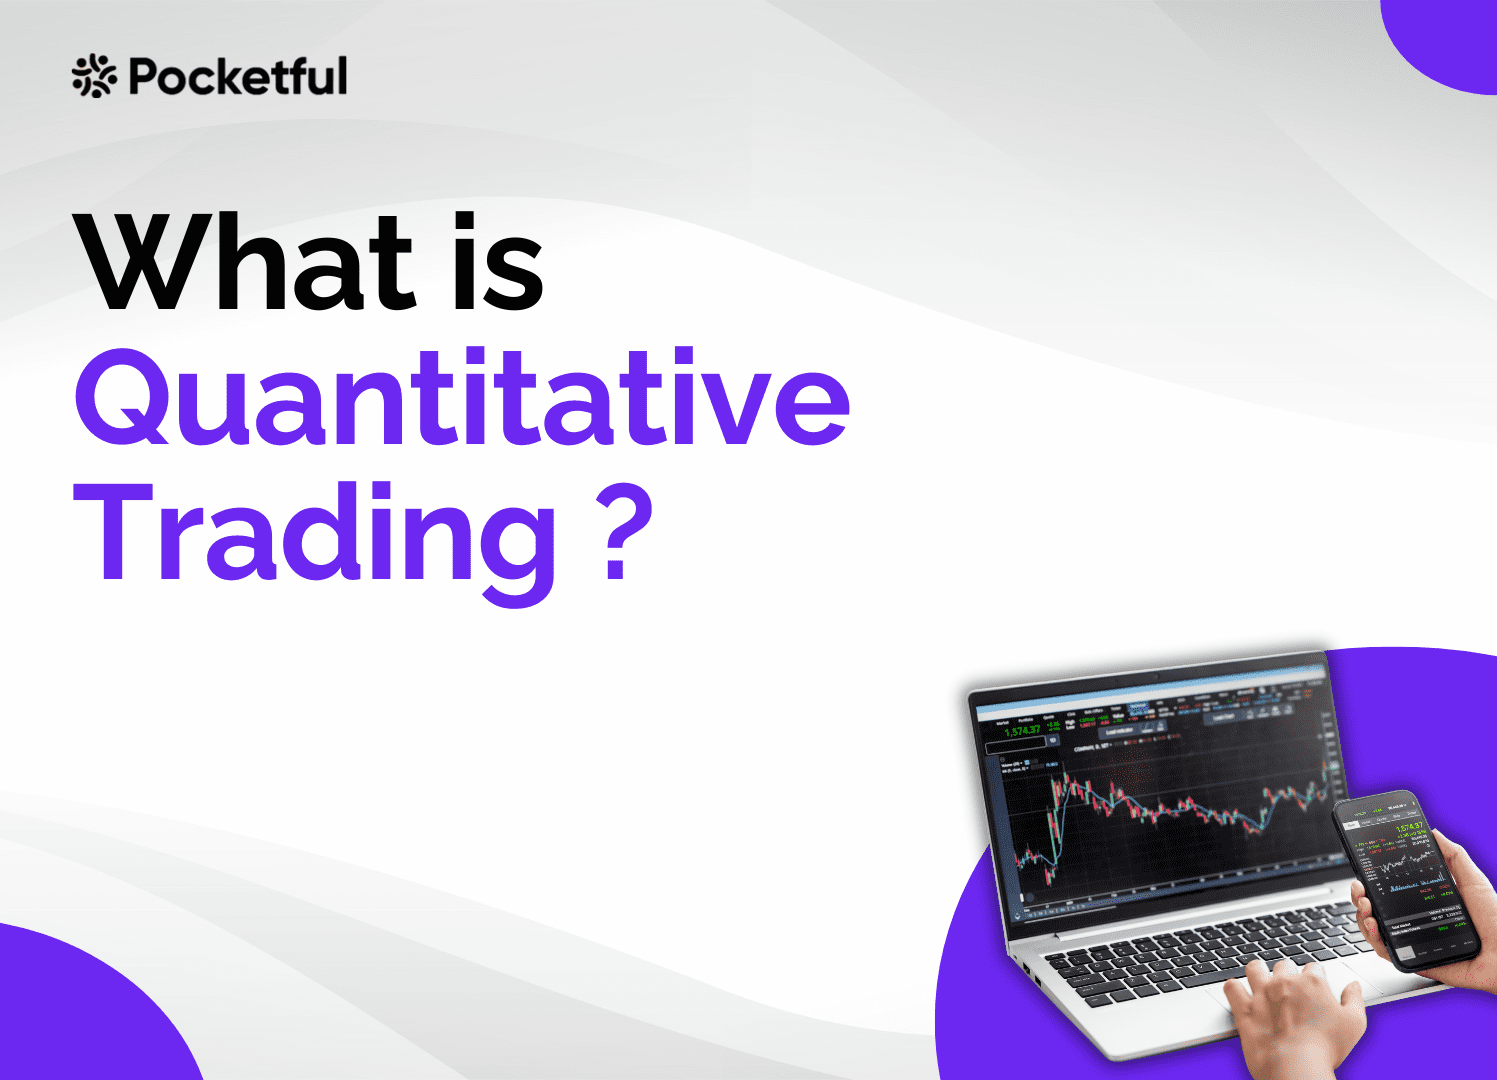 What is Quantitative Trading?